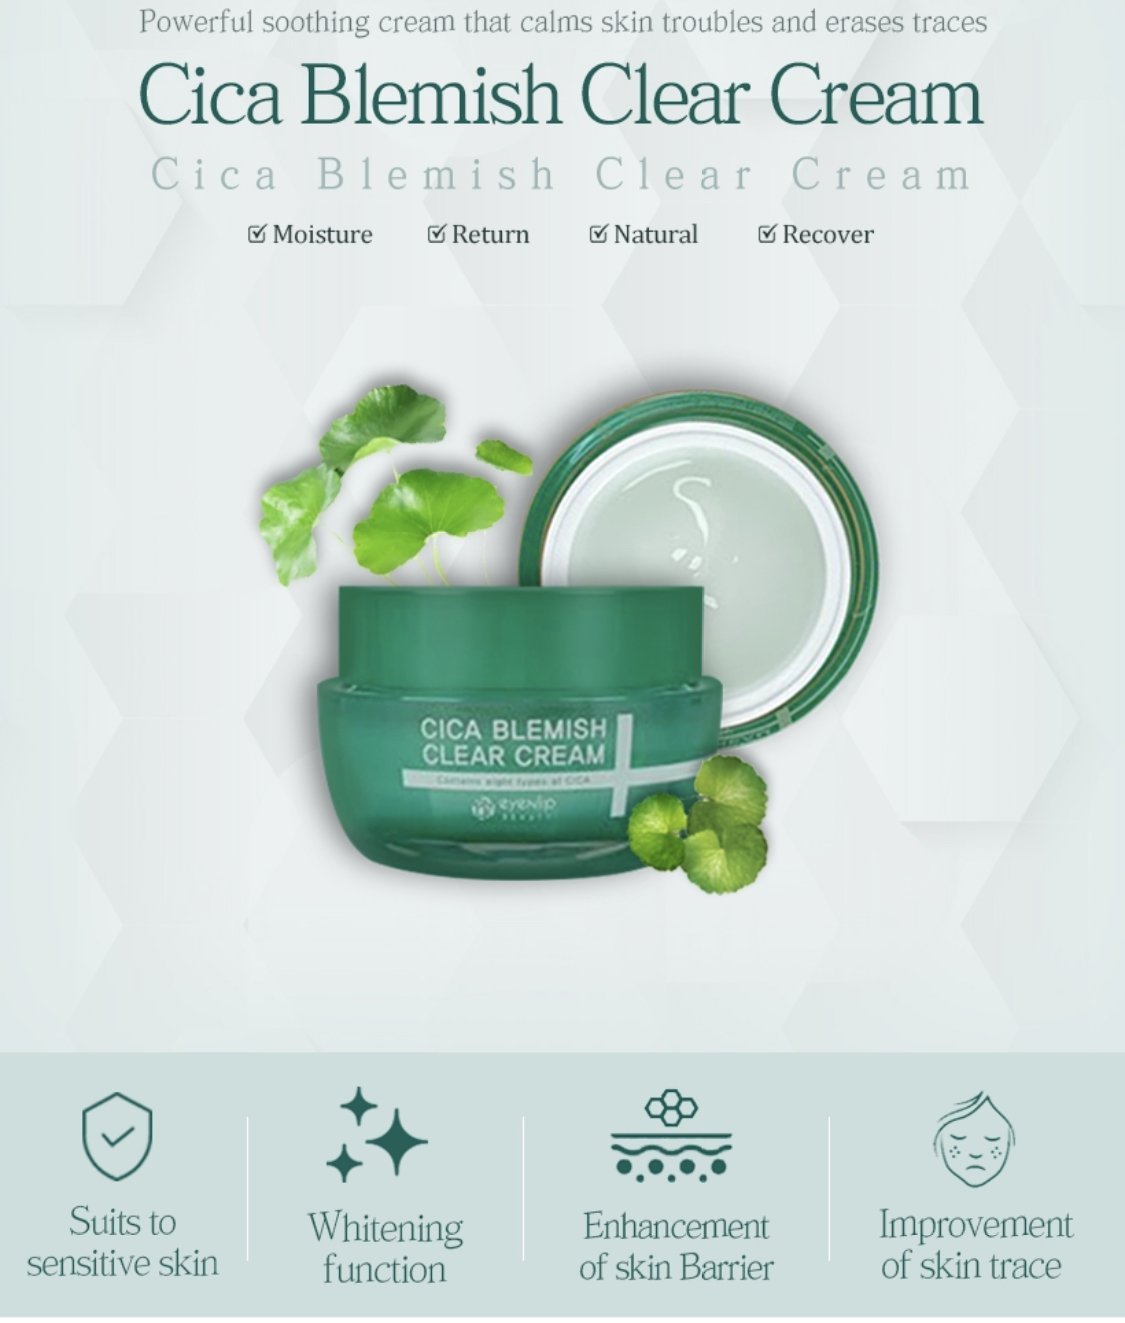 [EYENLIP] Cica Blemish Clear Cream (0.365 lbs) - Thuy Nhung Shop